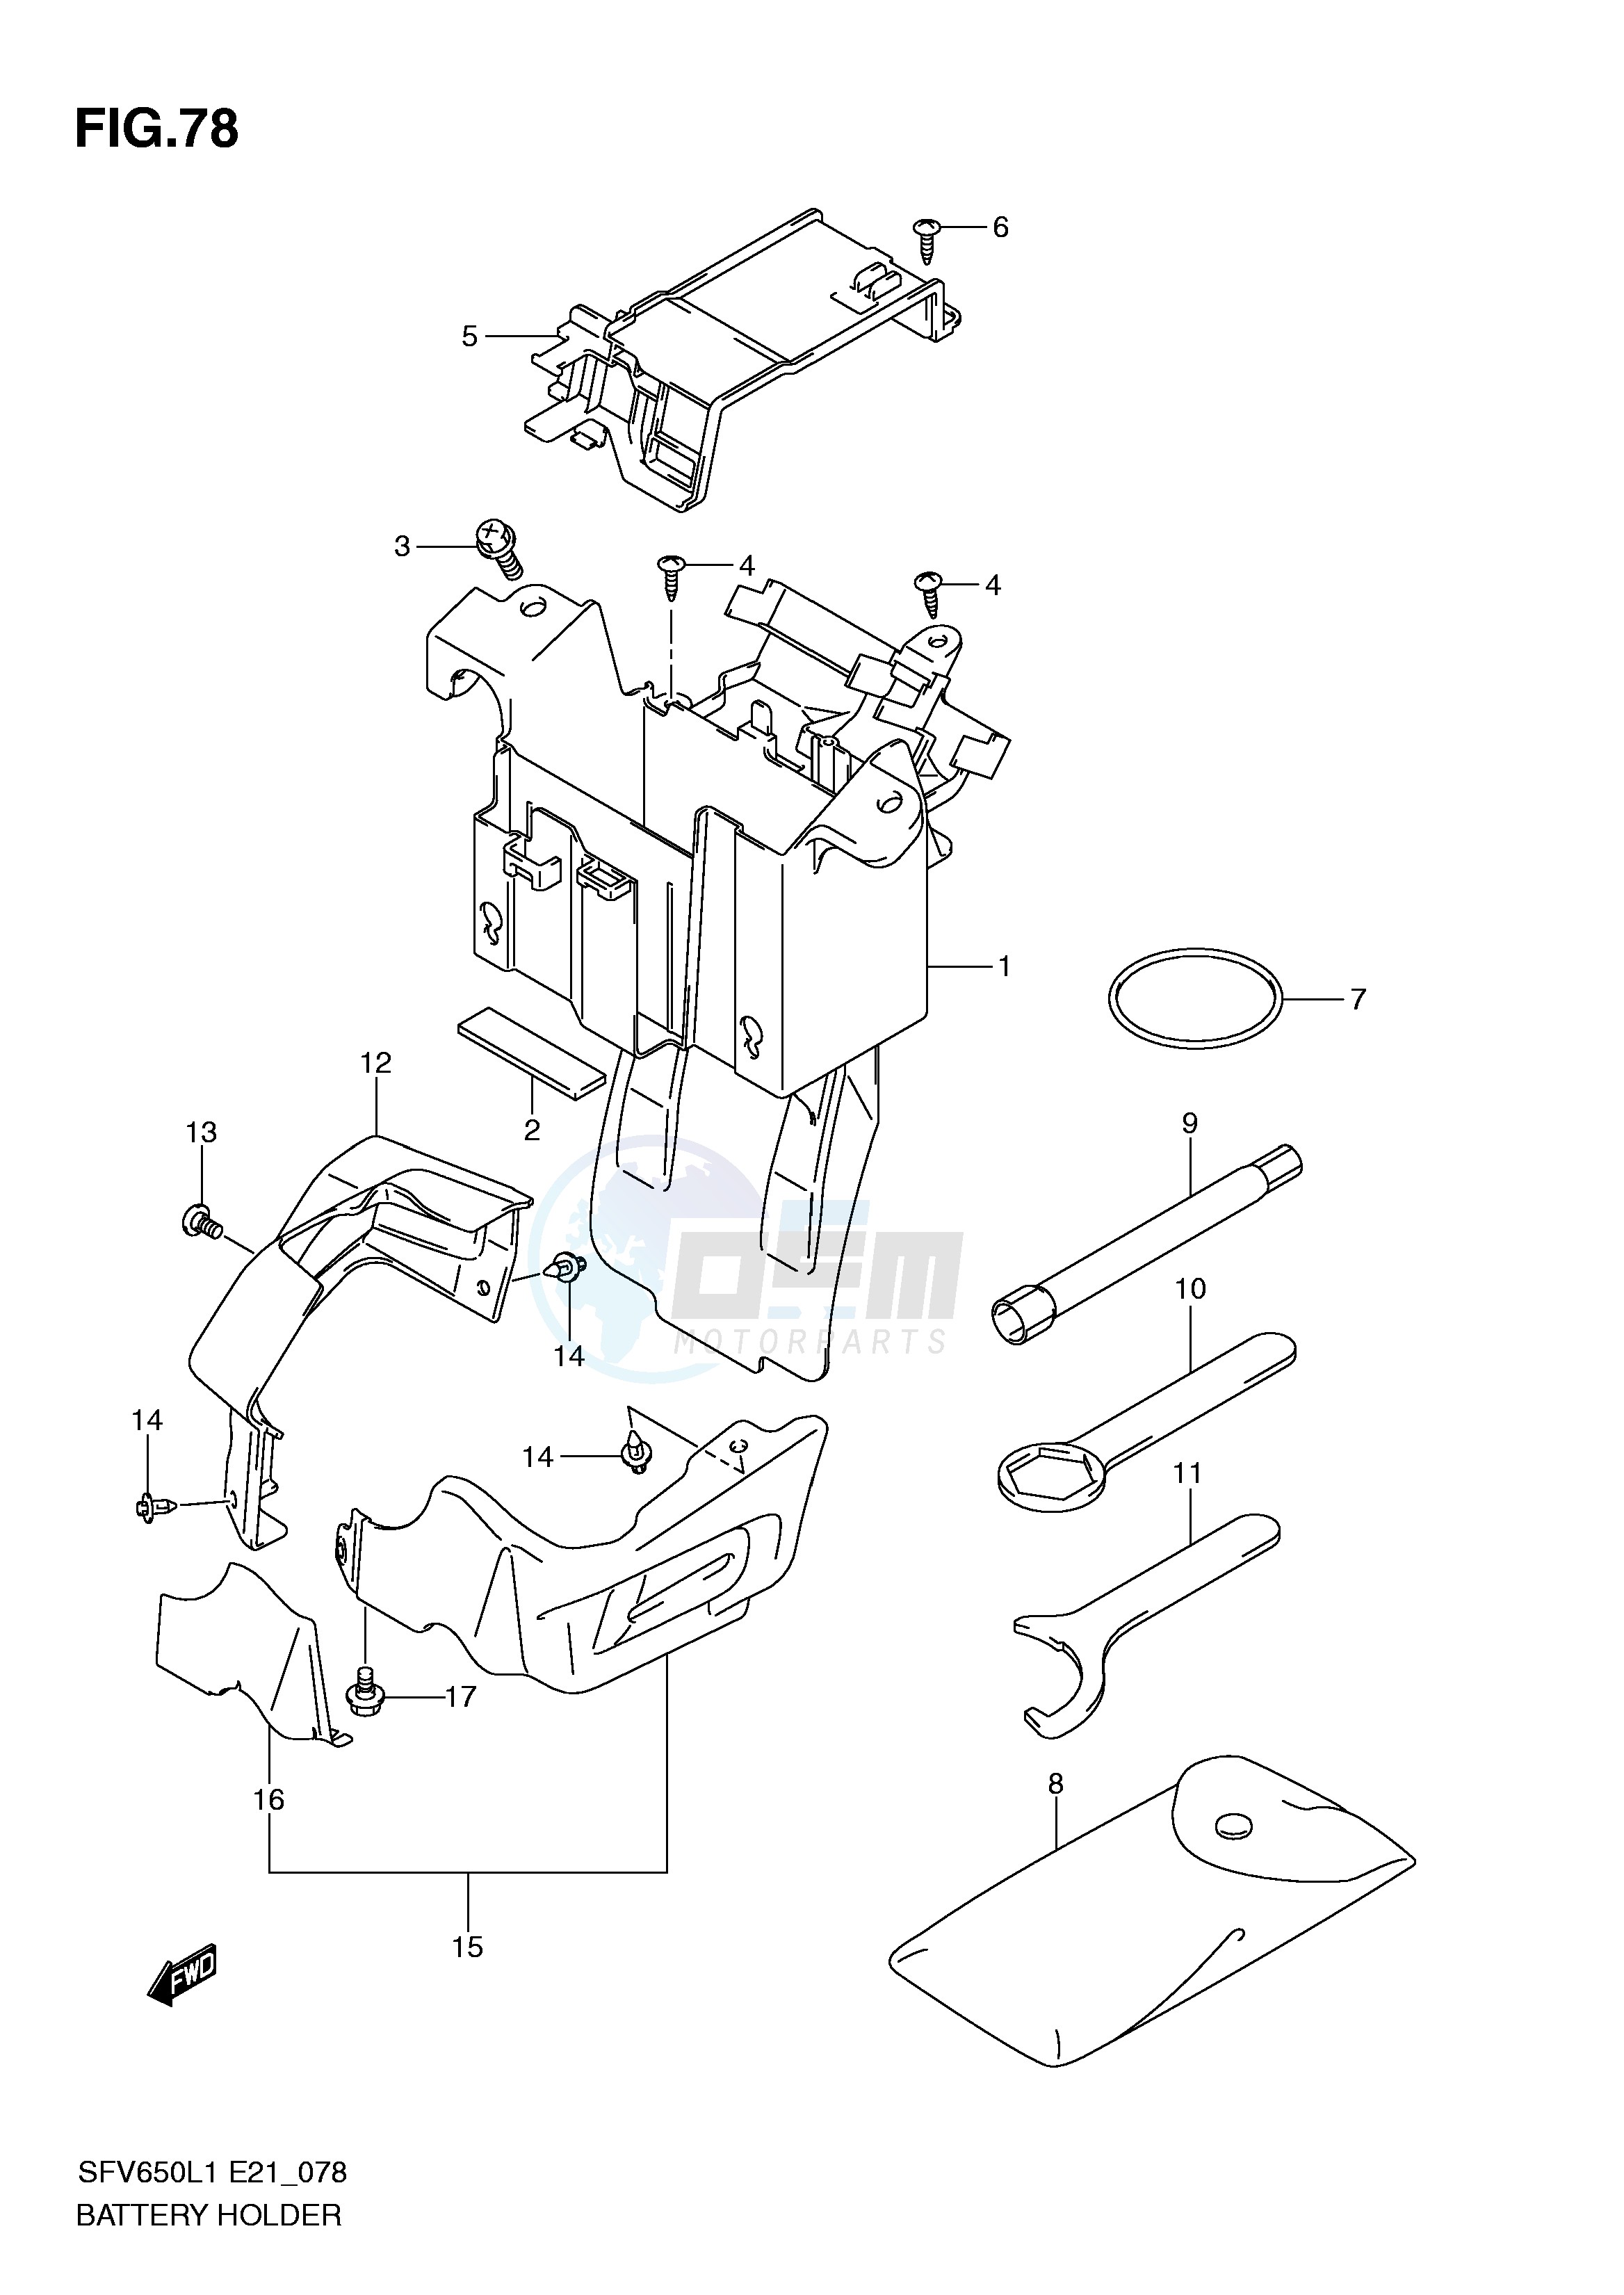 BATTERY HOLDER (SFV650AL1 E21) blueprint